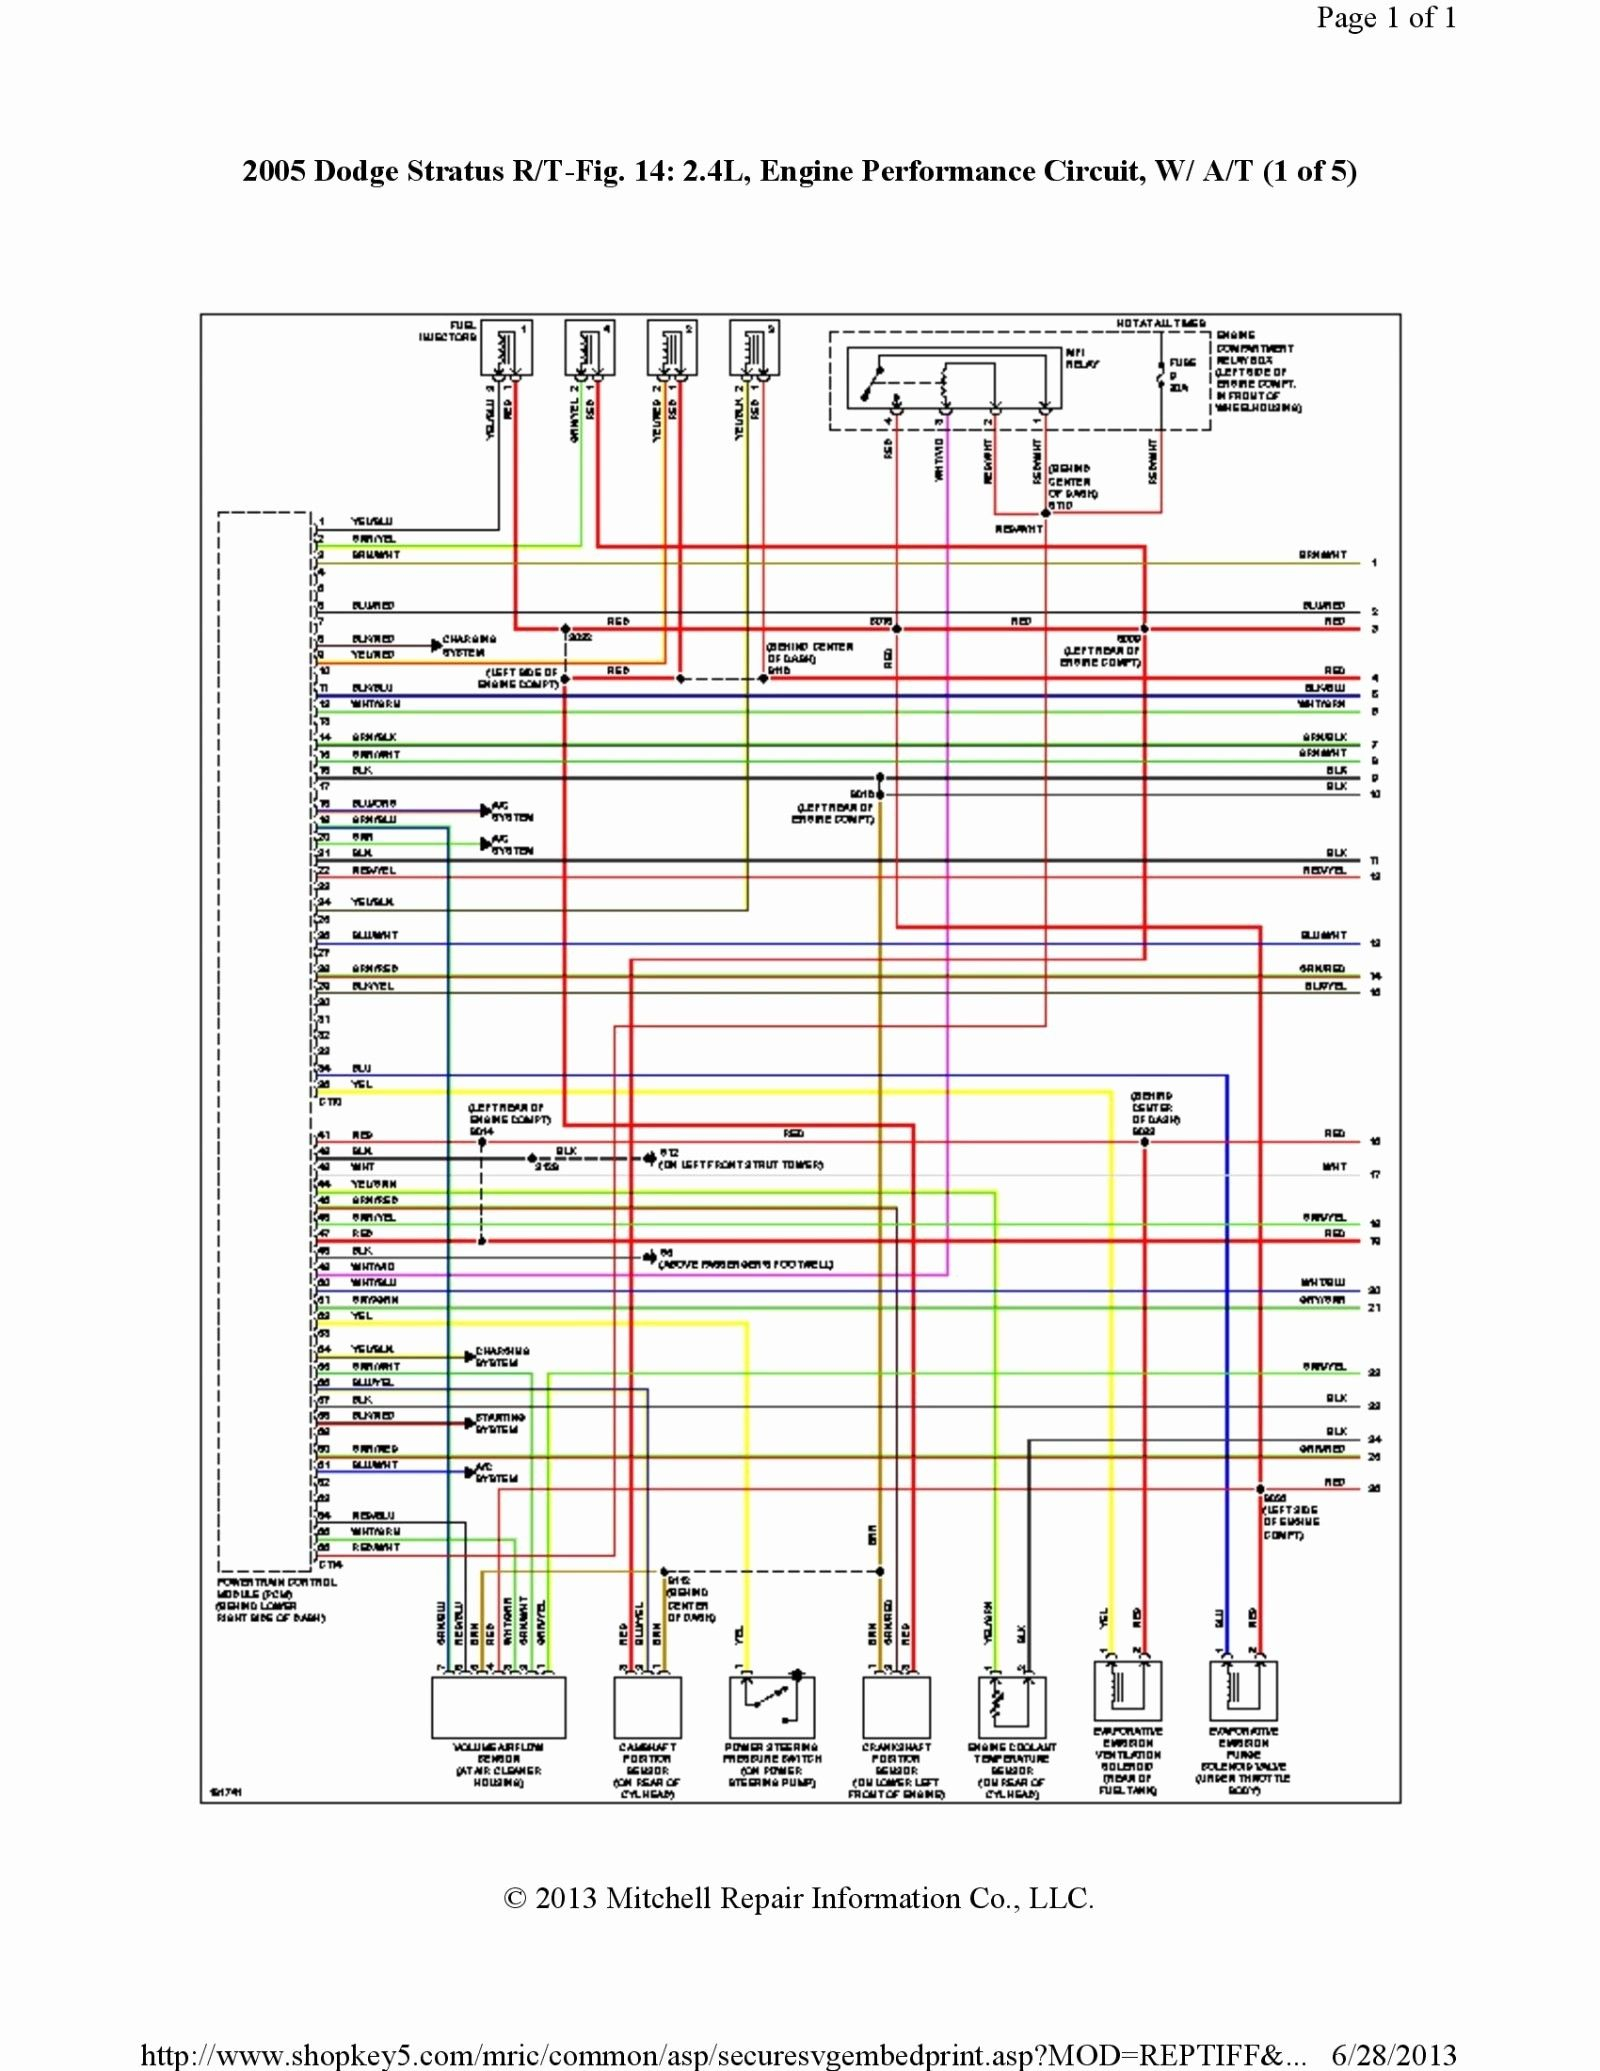 2004 Dodge Ram 1500 Radio Wiring Diagram Pictures Wiring Diagram Sample